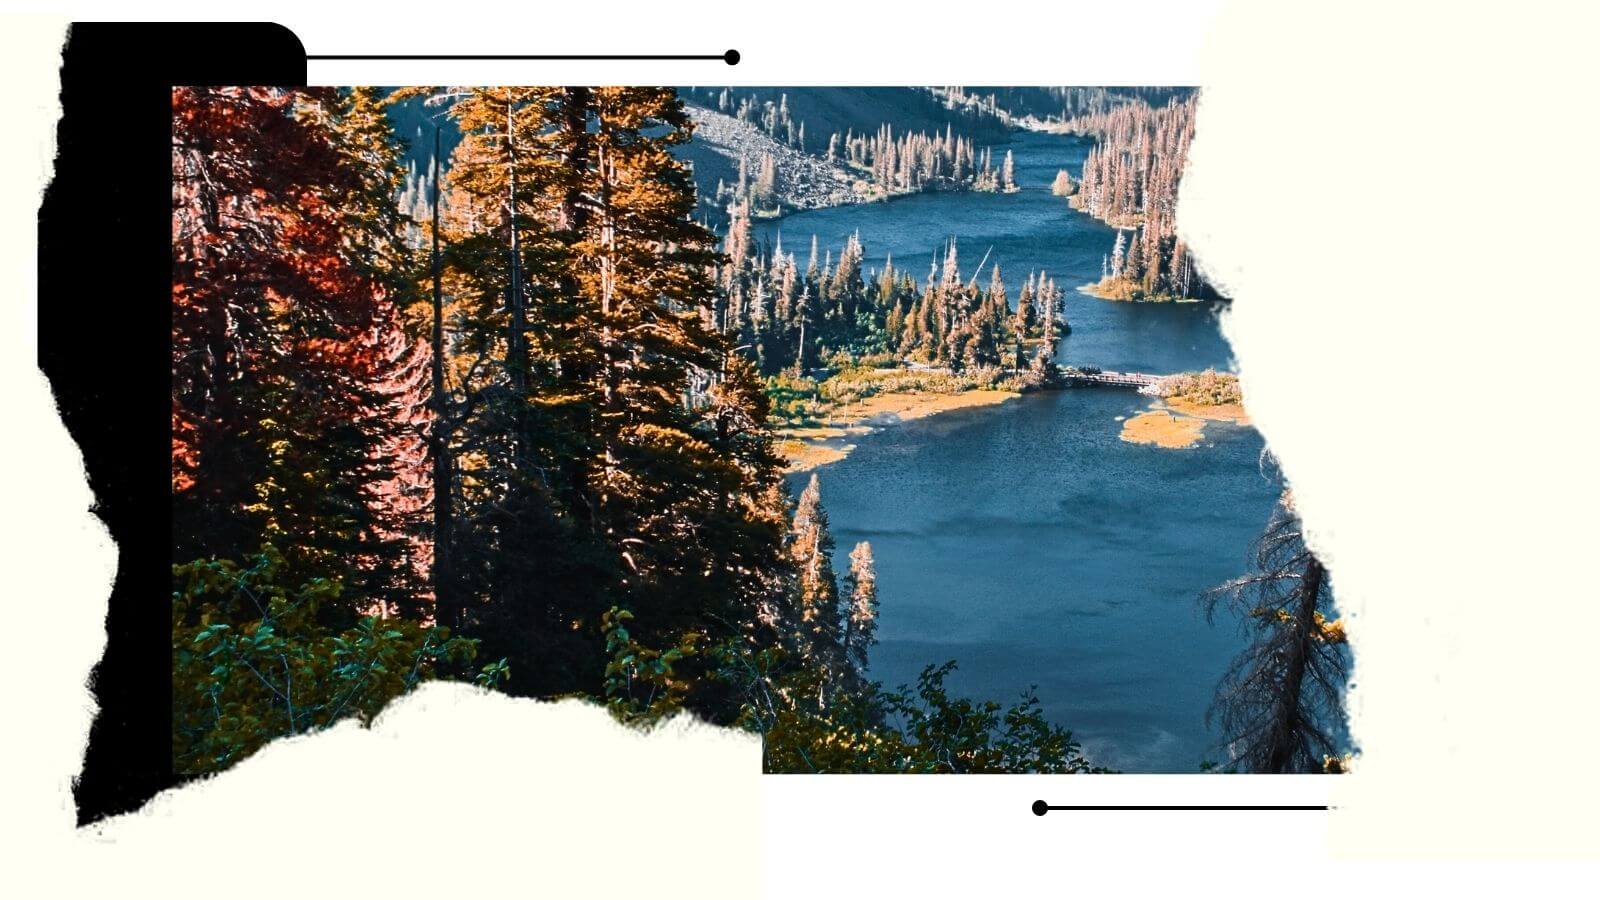 Yosemite and yellowstone compared